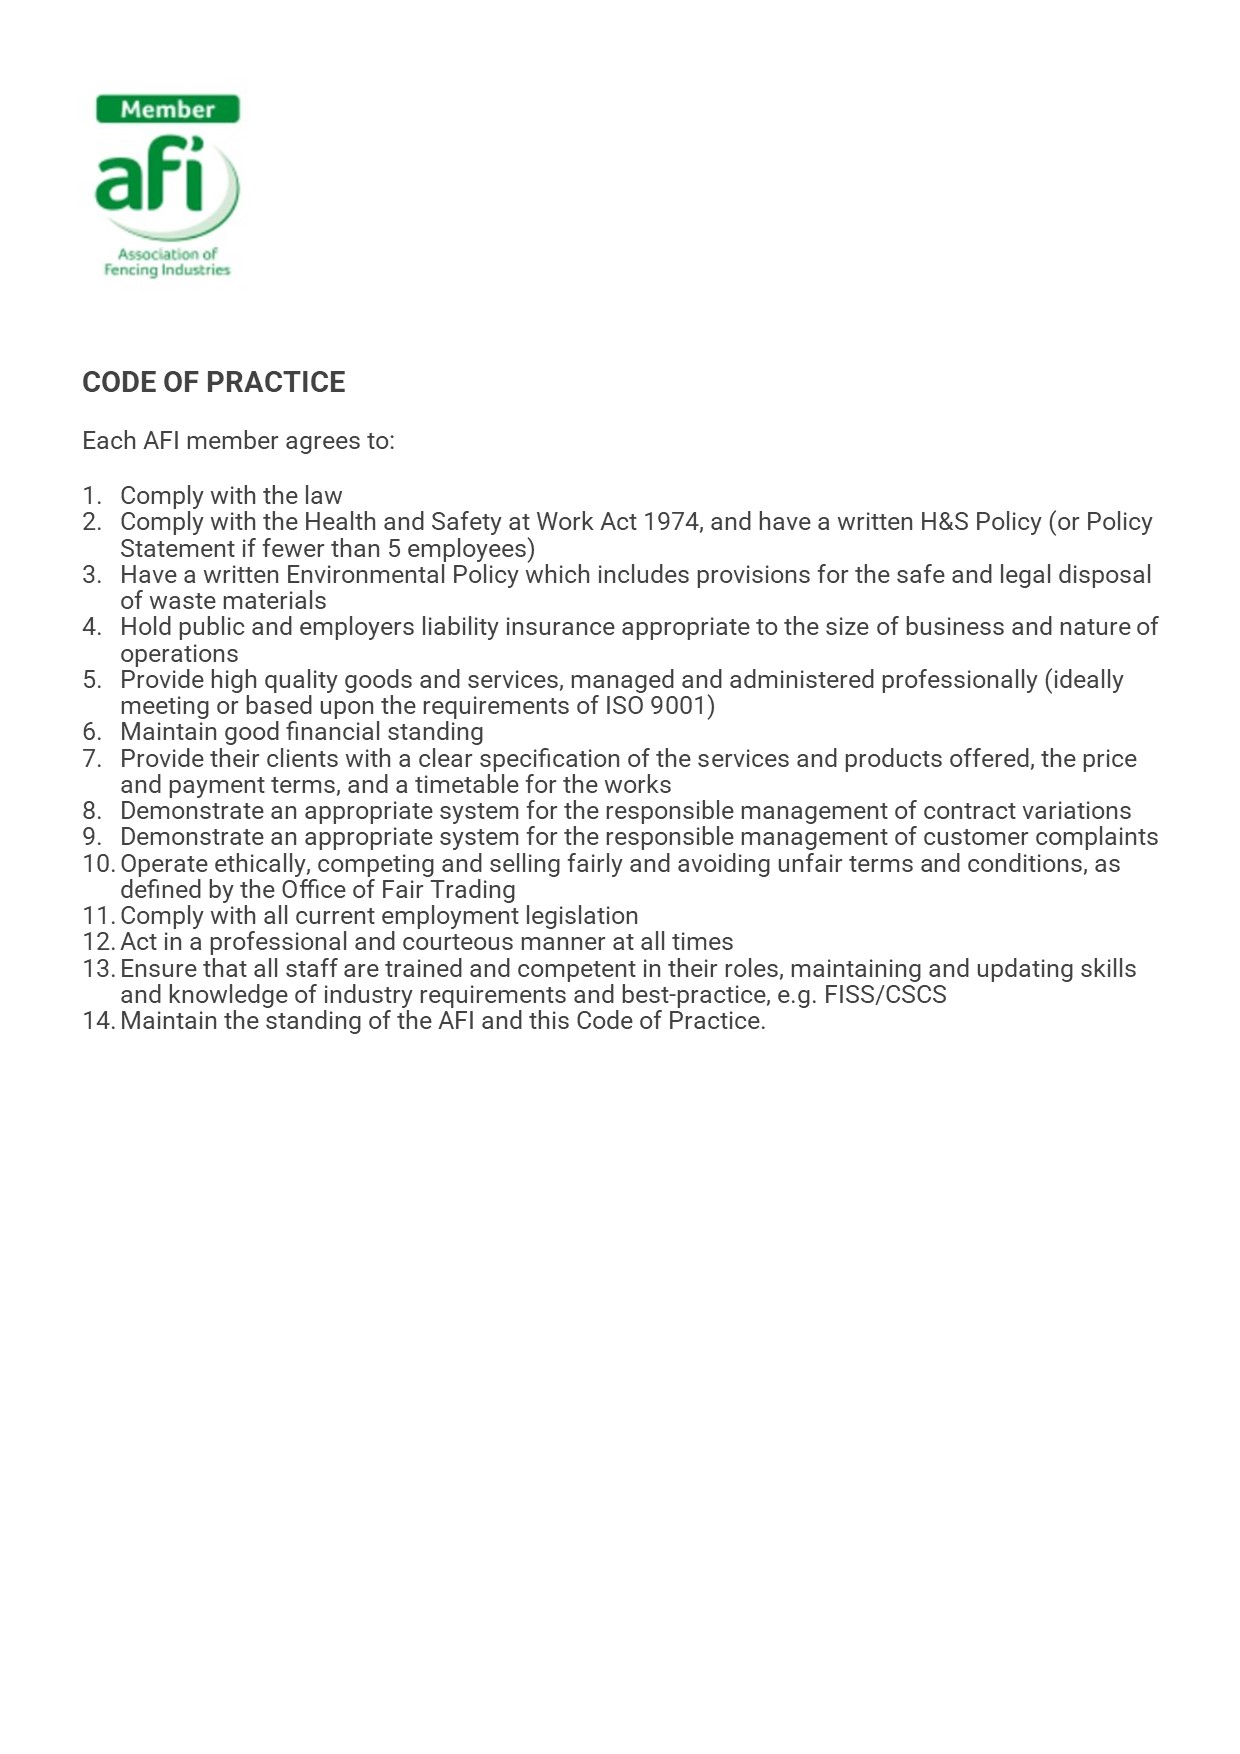 AFI code of practice